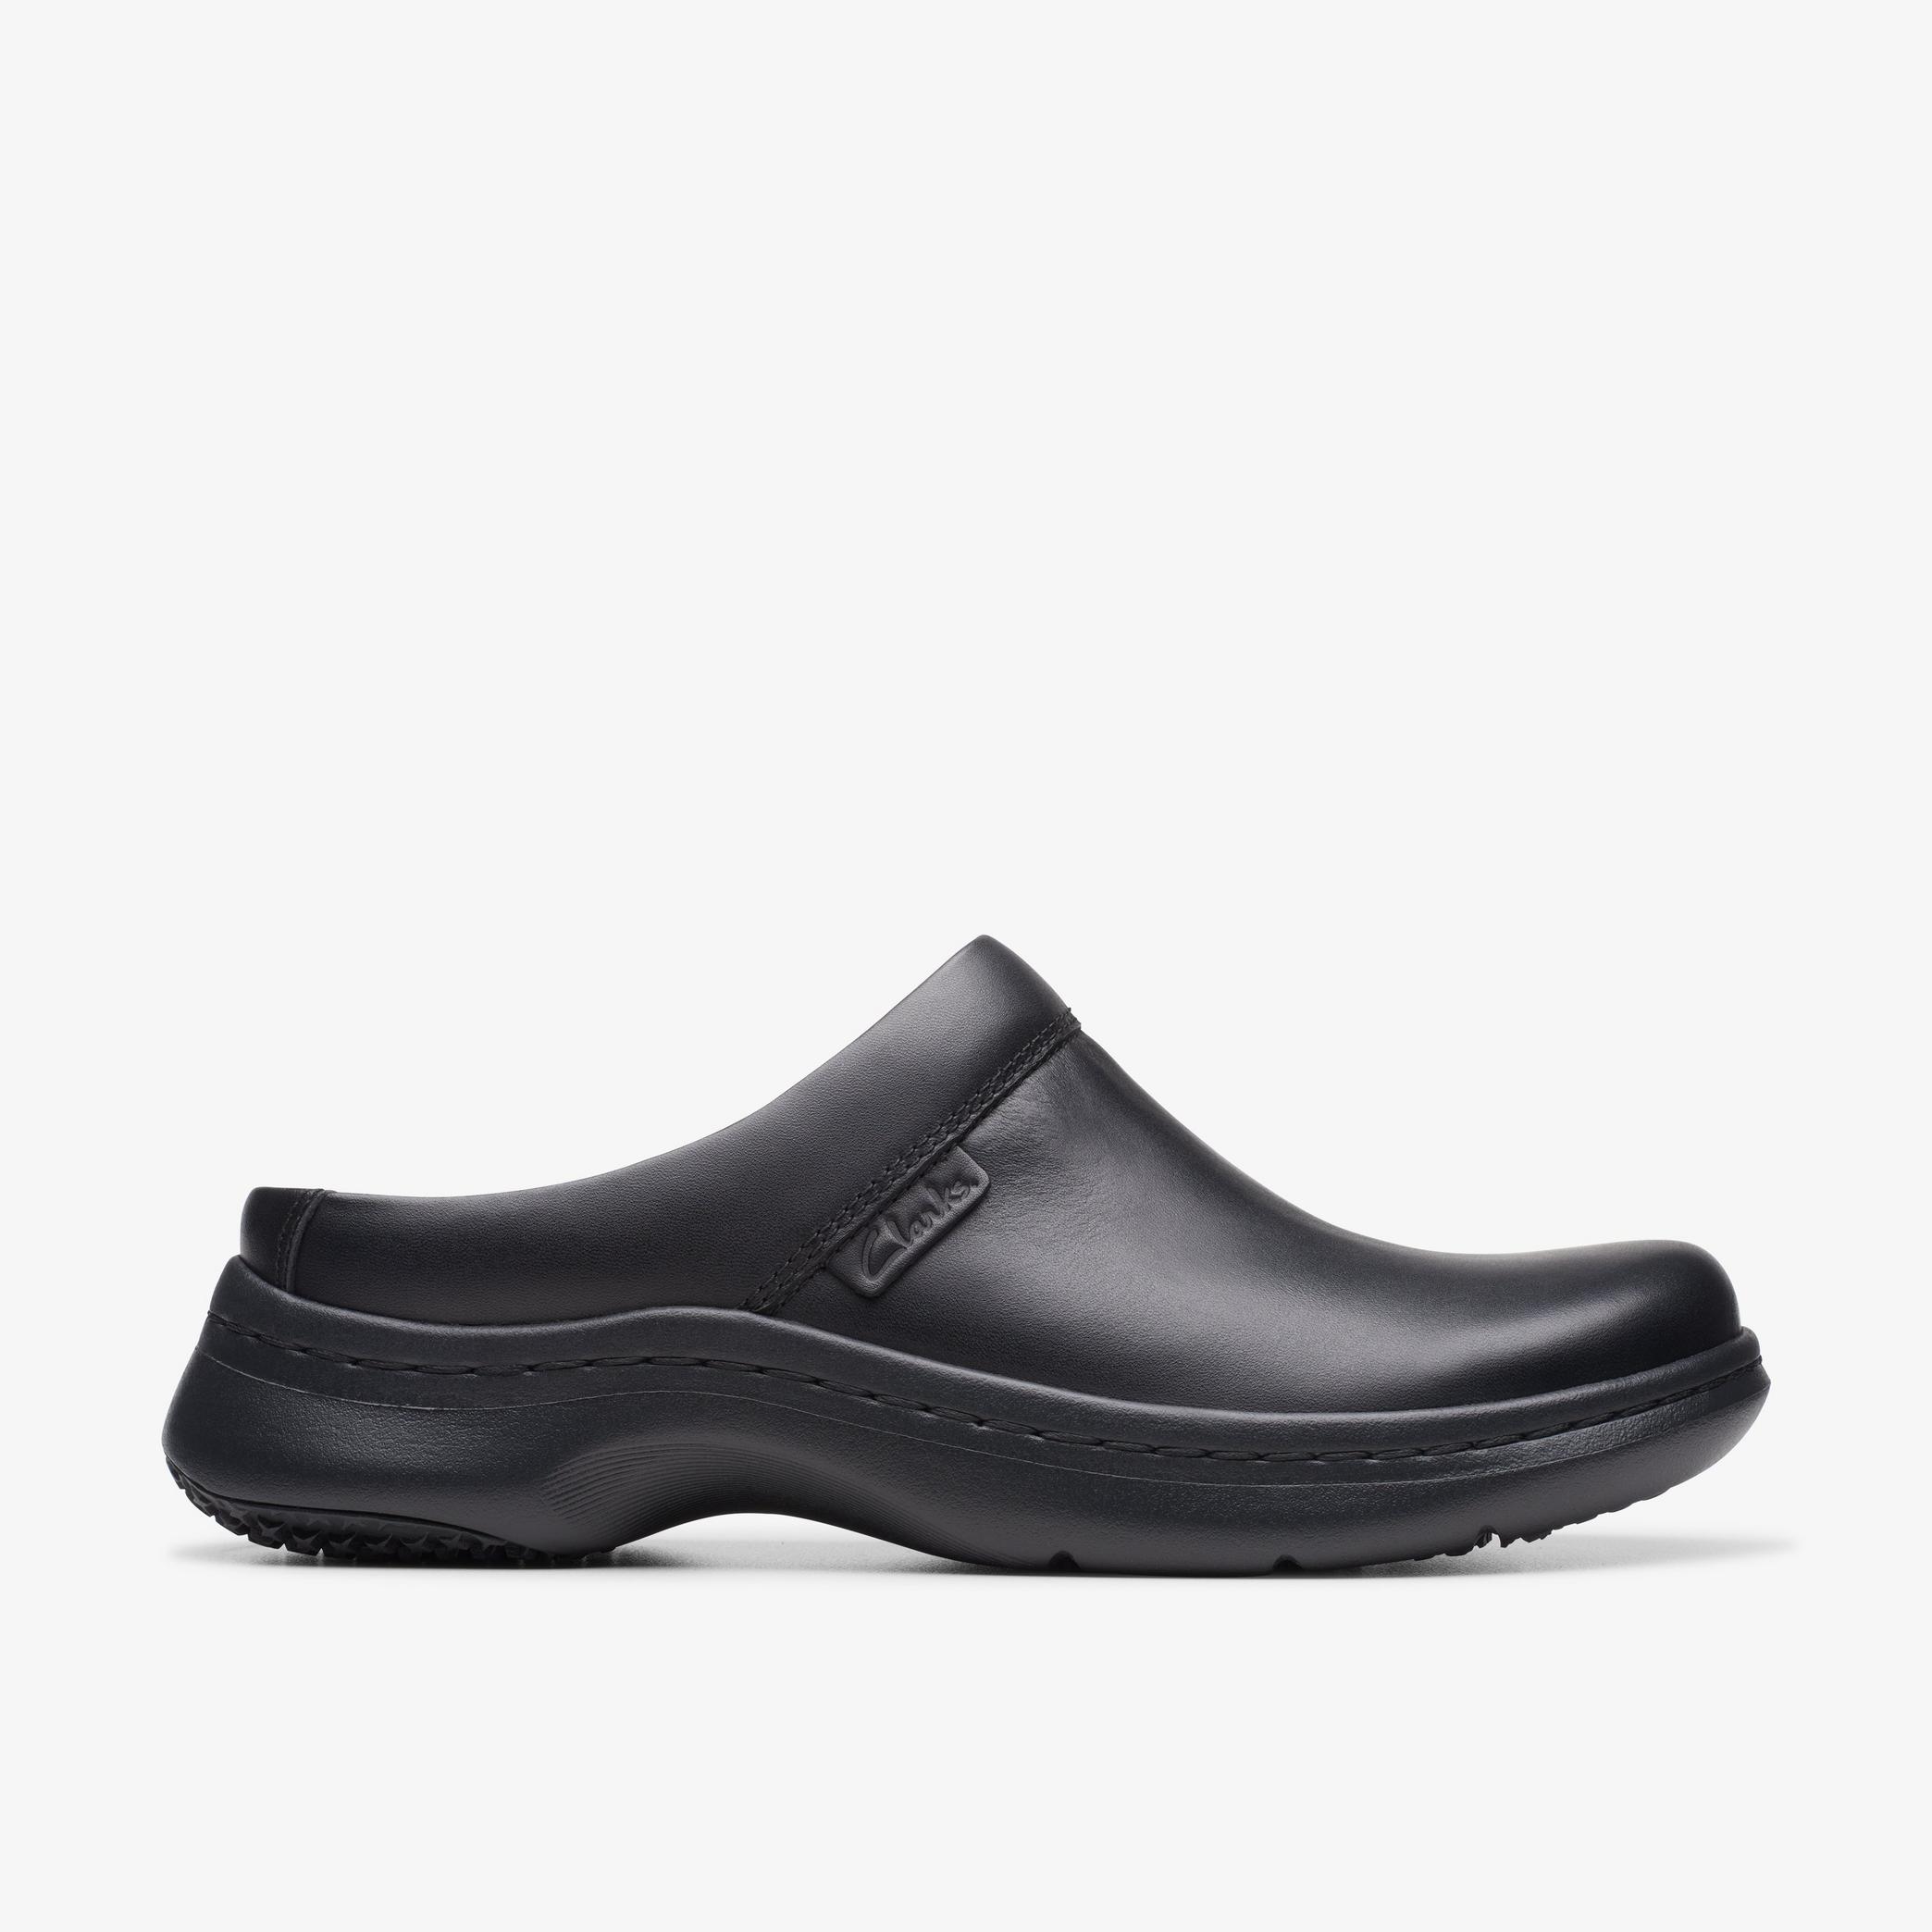 Women ClarksPro Clog Black Leather Shoes | Clarks US